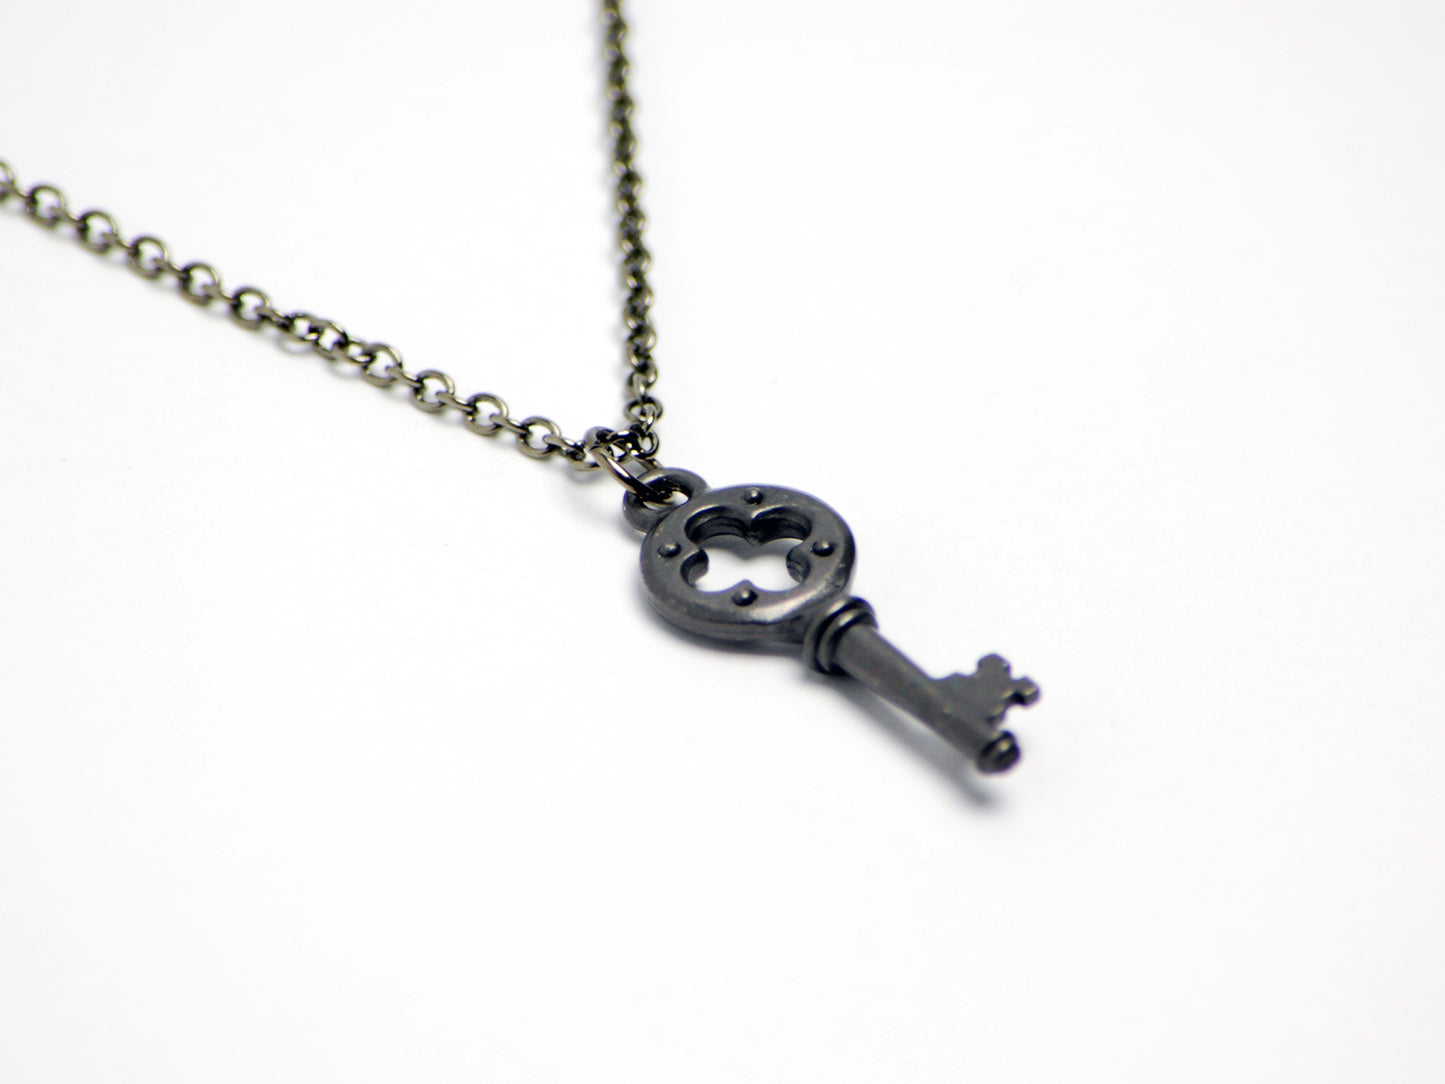 Quatrefoil Key Necklace in Gunmetal